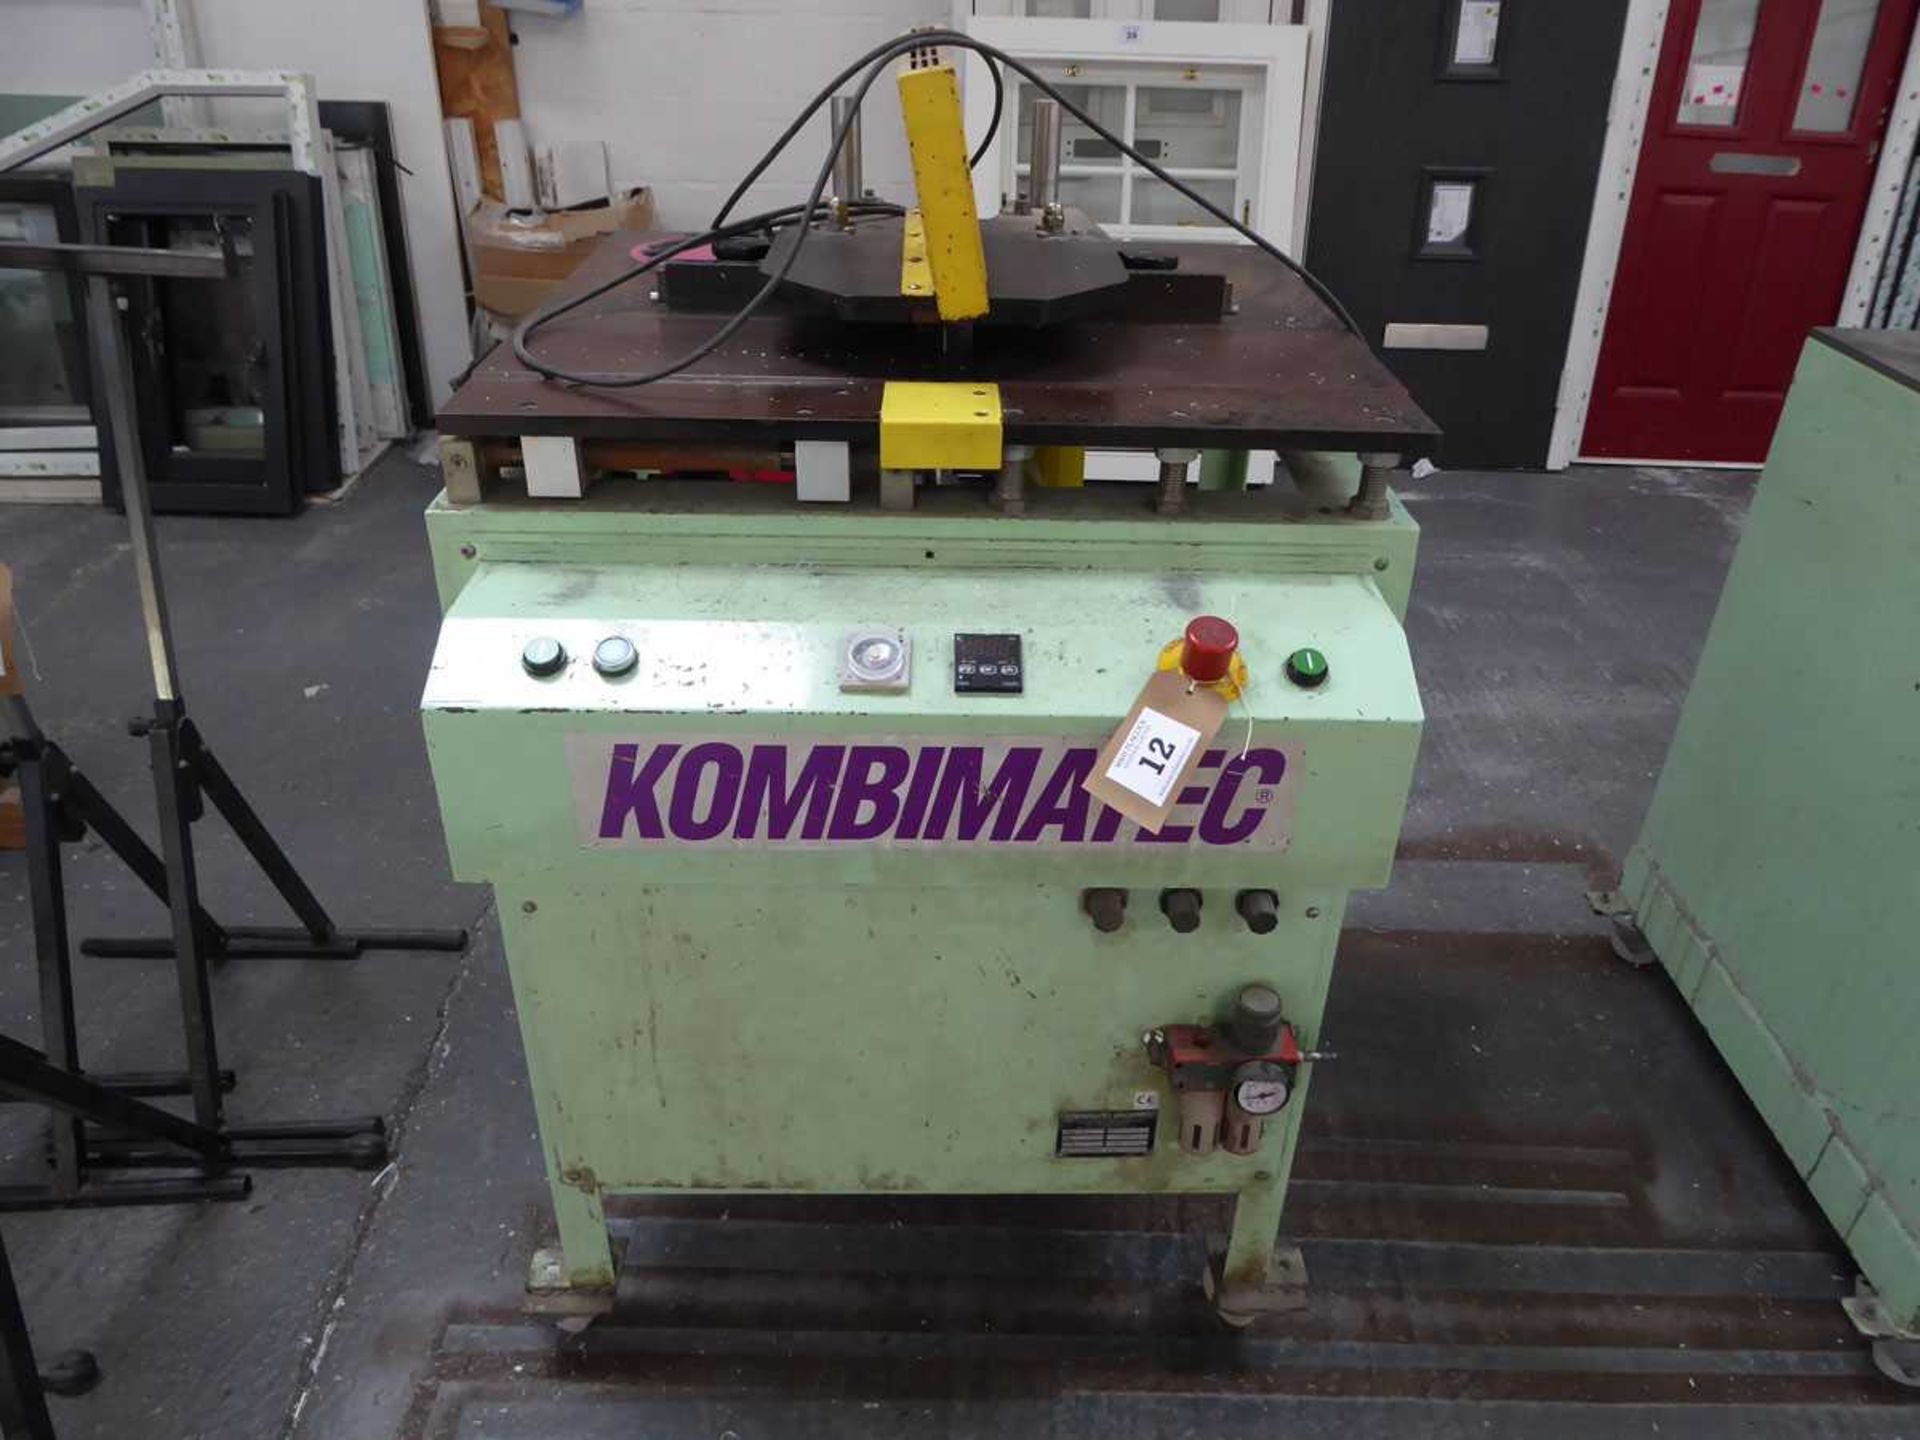 Kombimatec EKS432 single head welder, single phase electric, serial no. 6138